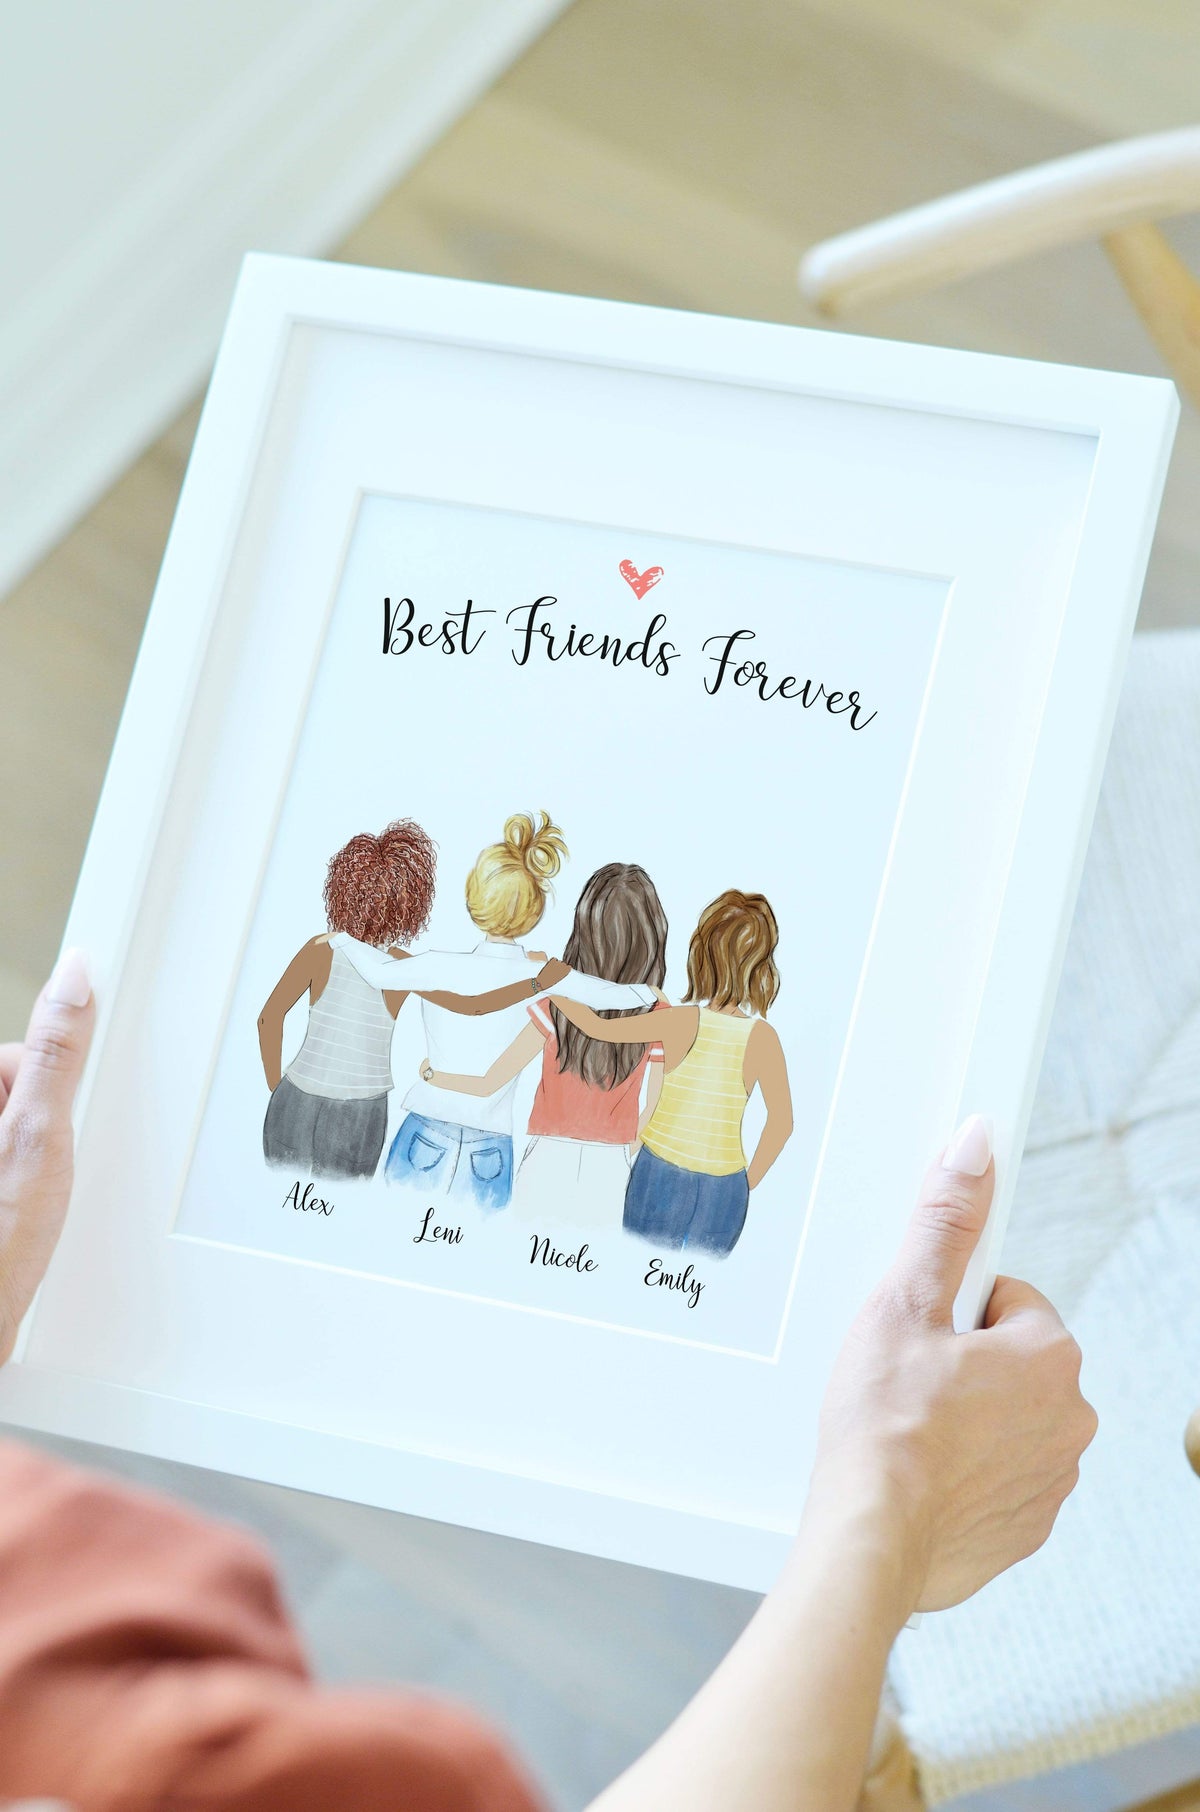 close friends forever